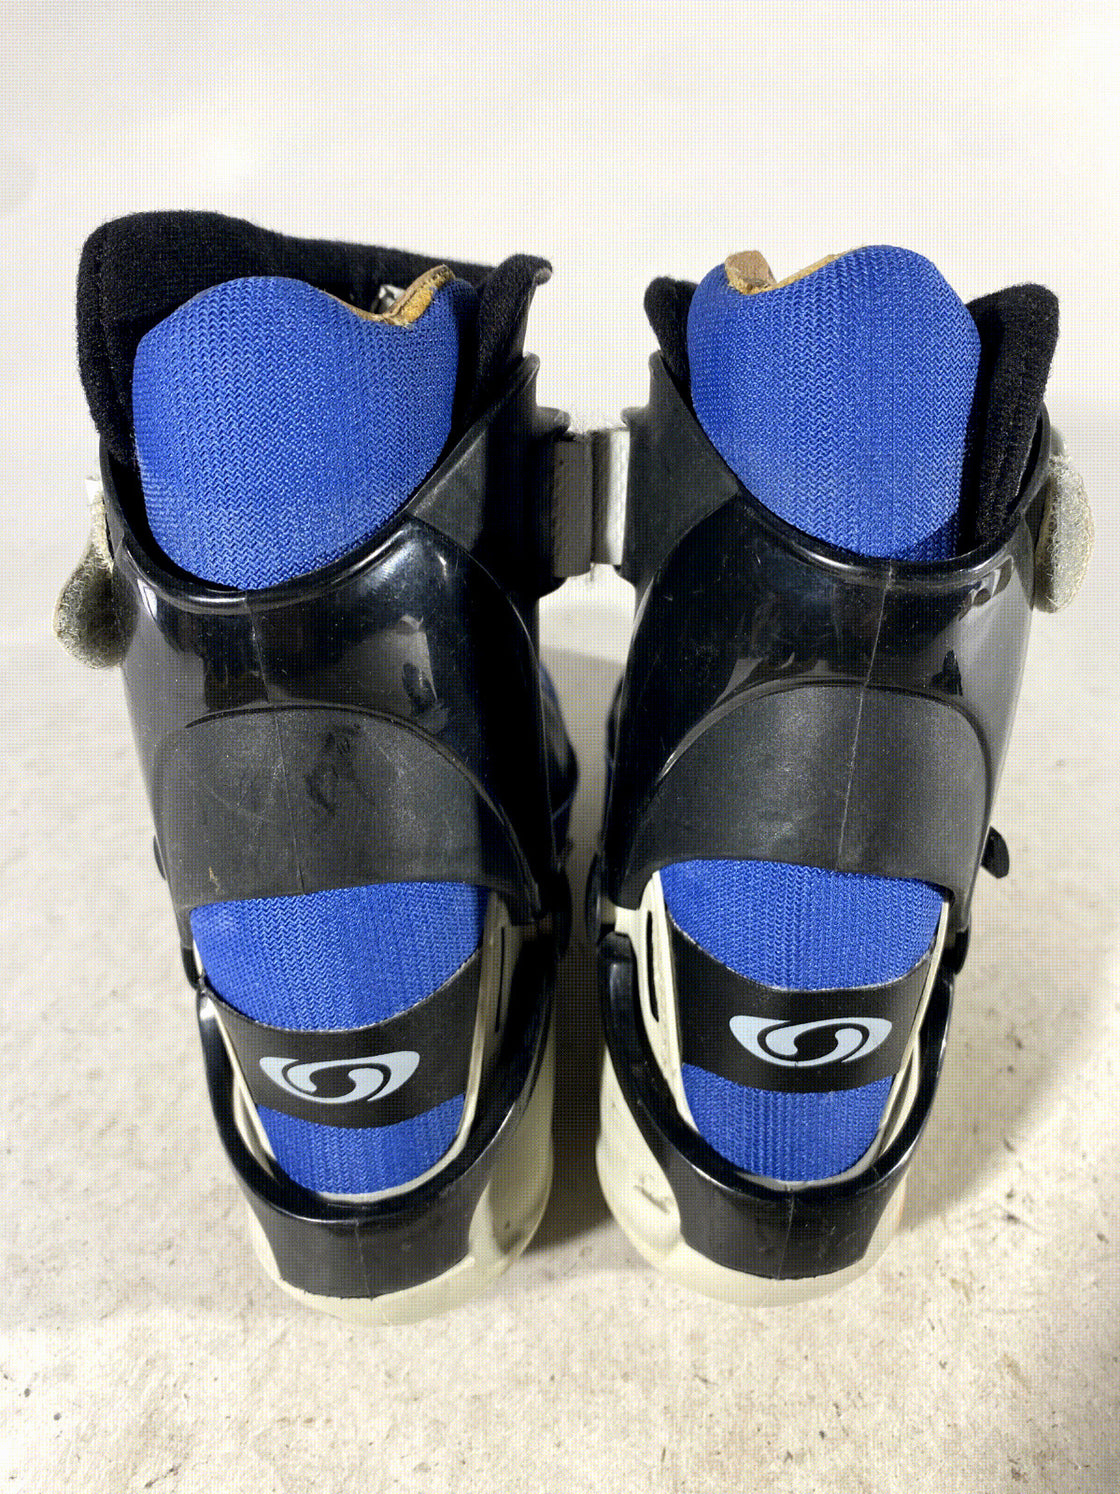 SALOMON Active 8 Skate Cross Country Ski Boots Size EU38 2/3 US6 SNS Profil